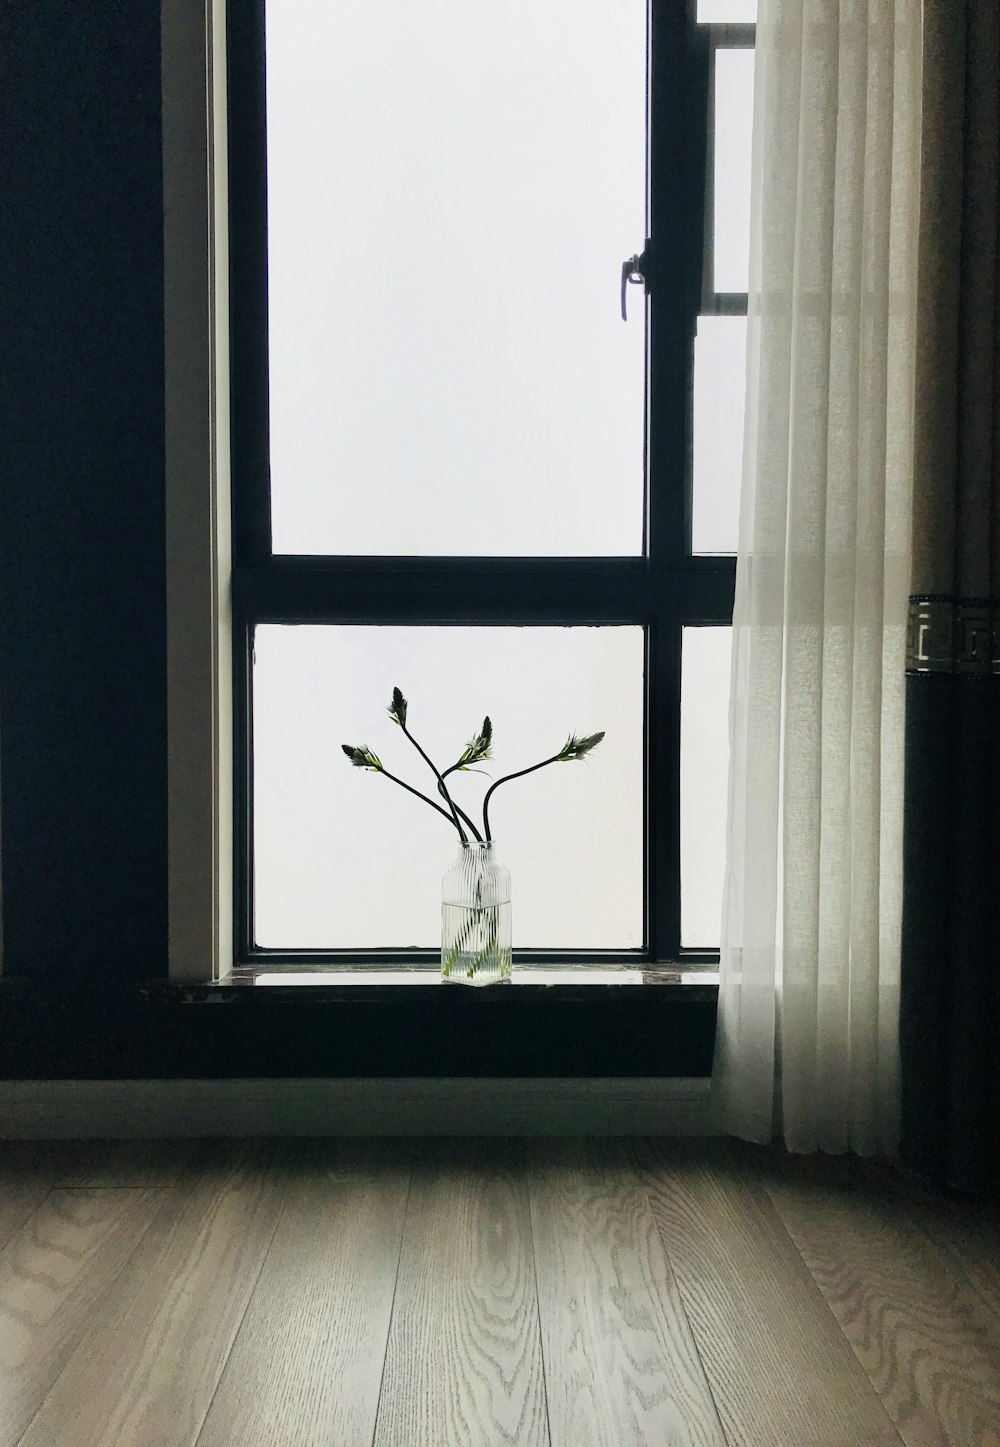 white flower on window during daytime